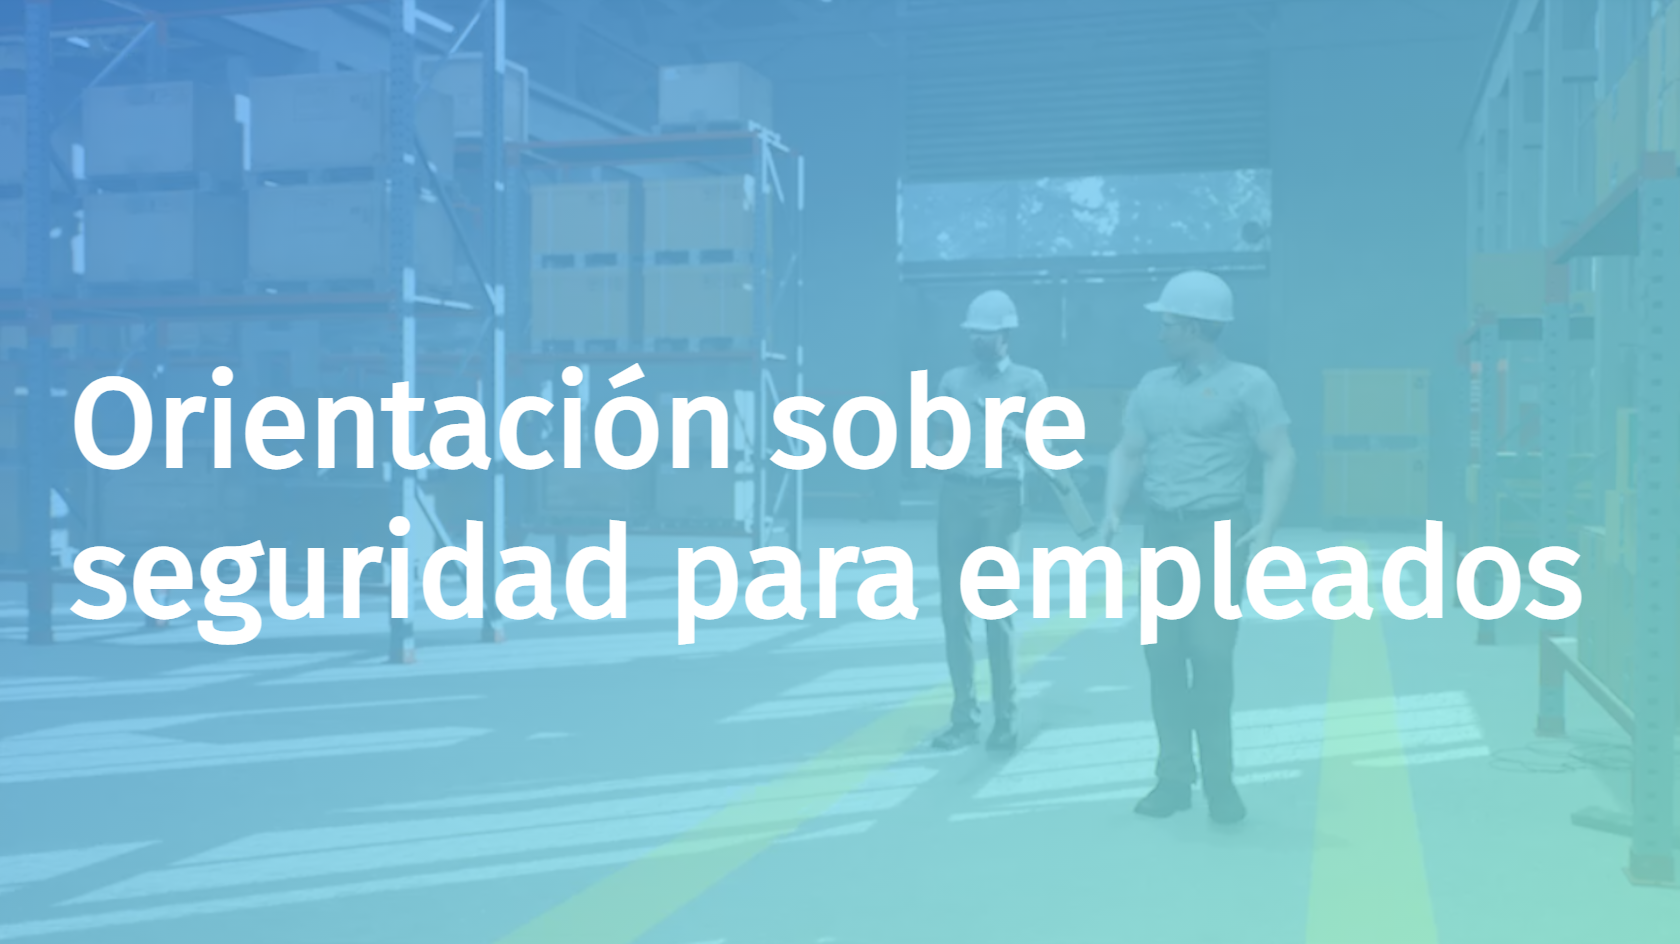 Spanish - Employee Safety Orientation